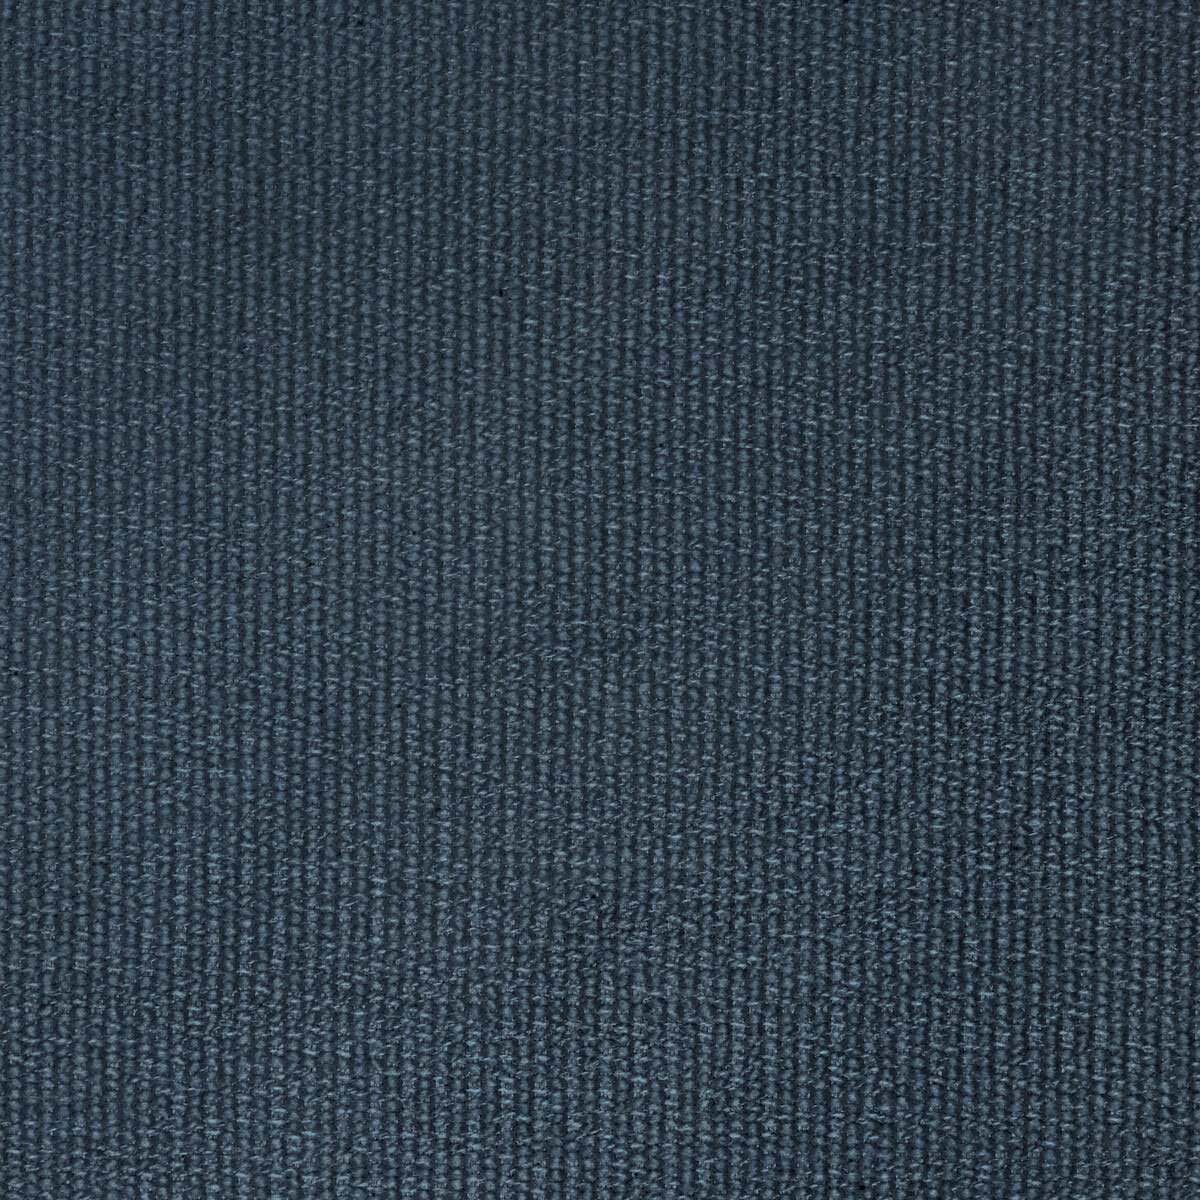 Lee Jofa Entoto Weave Marine Fabric | OnlineFabricStore